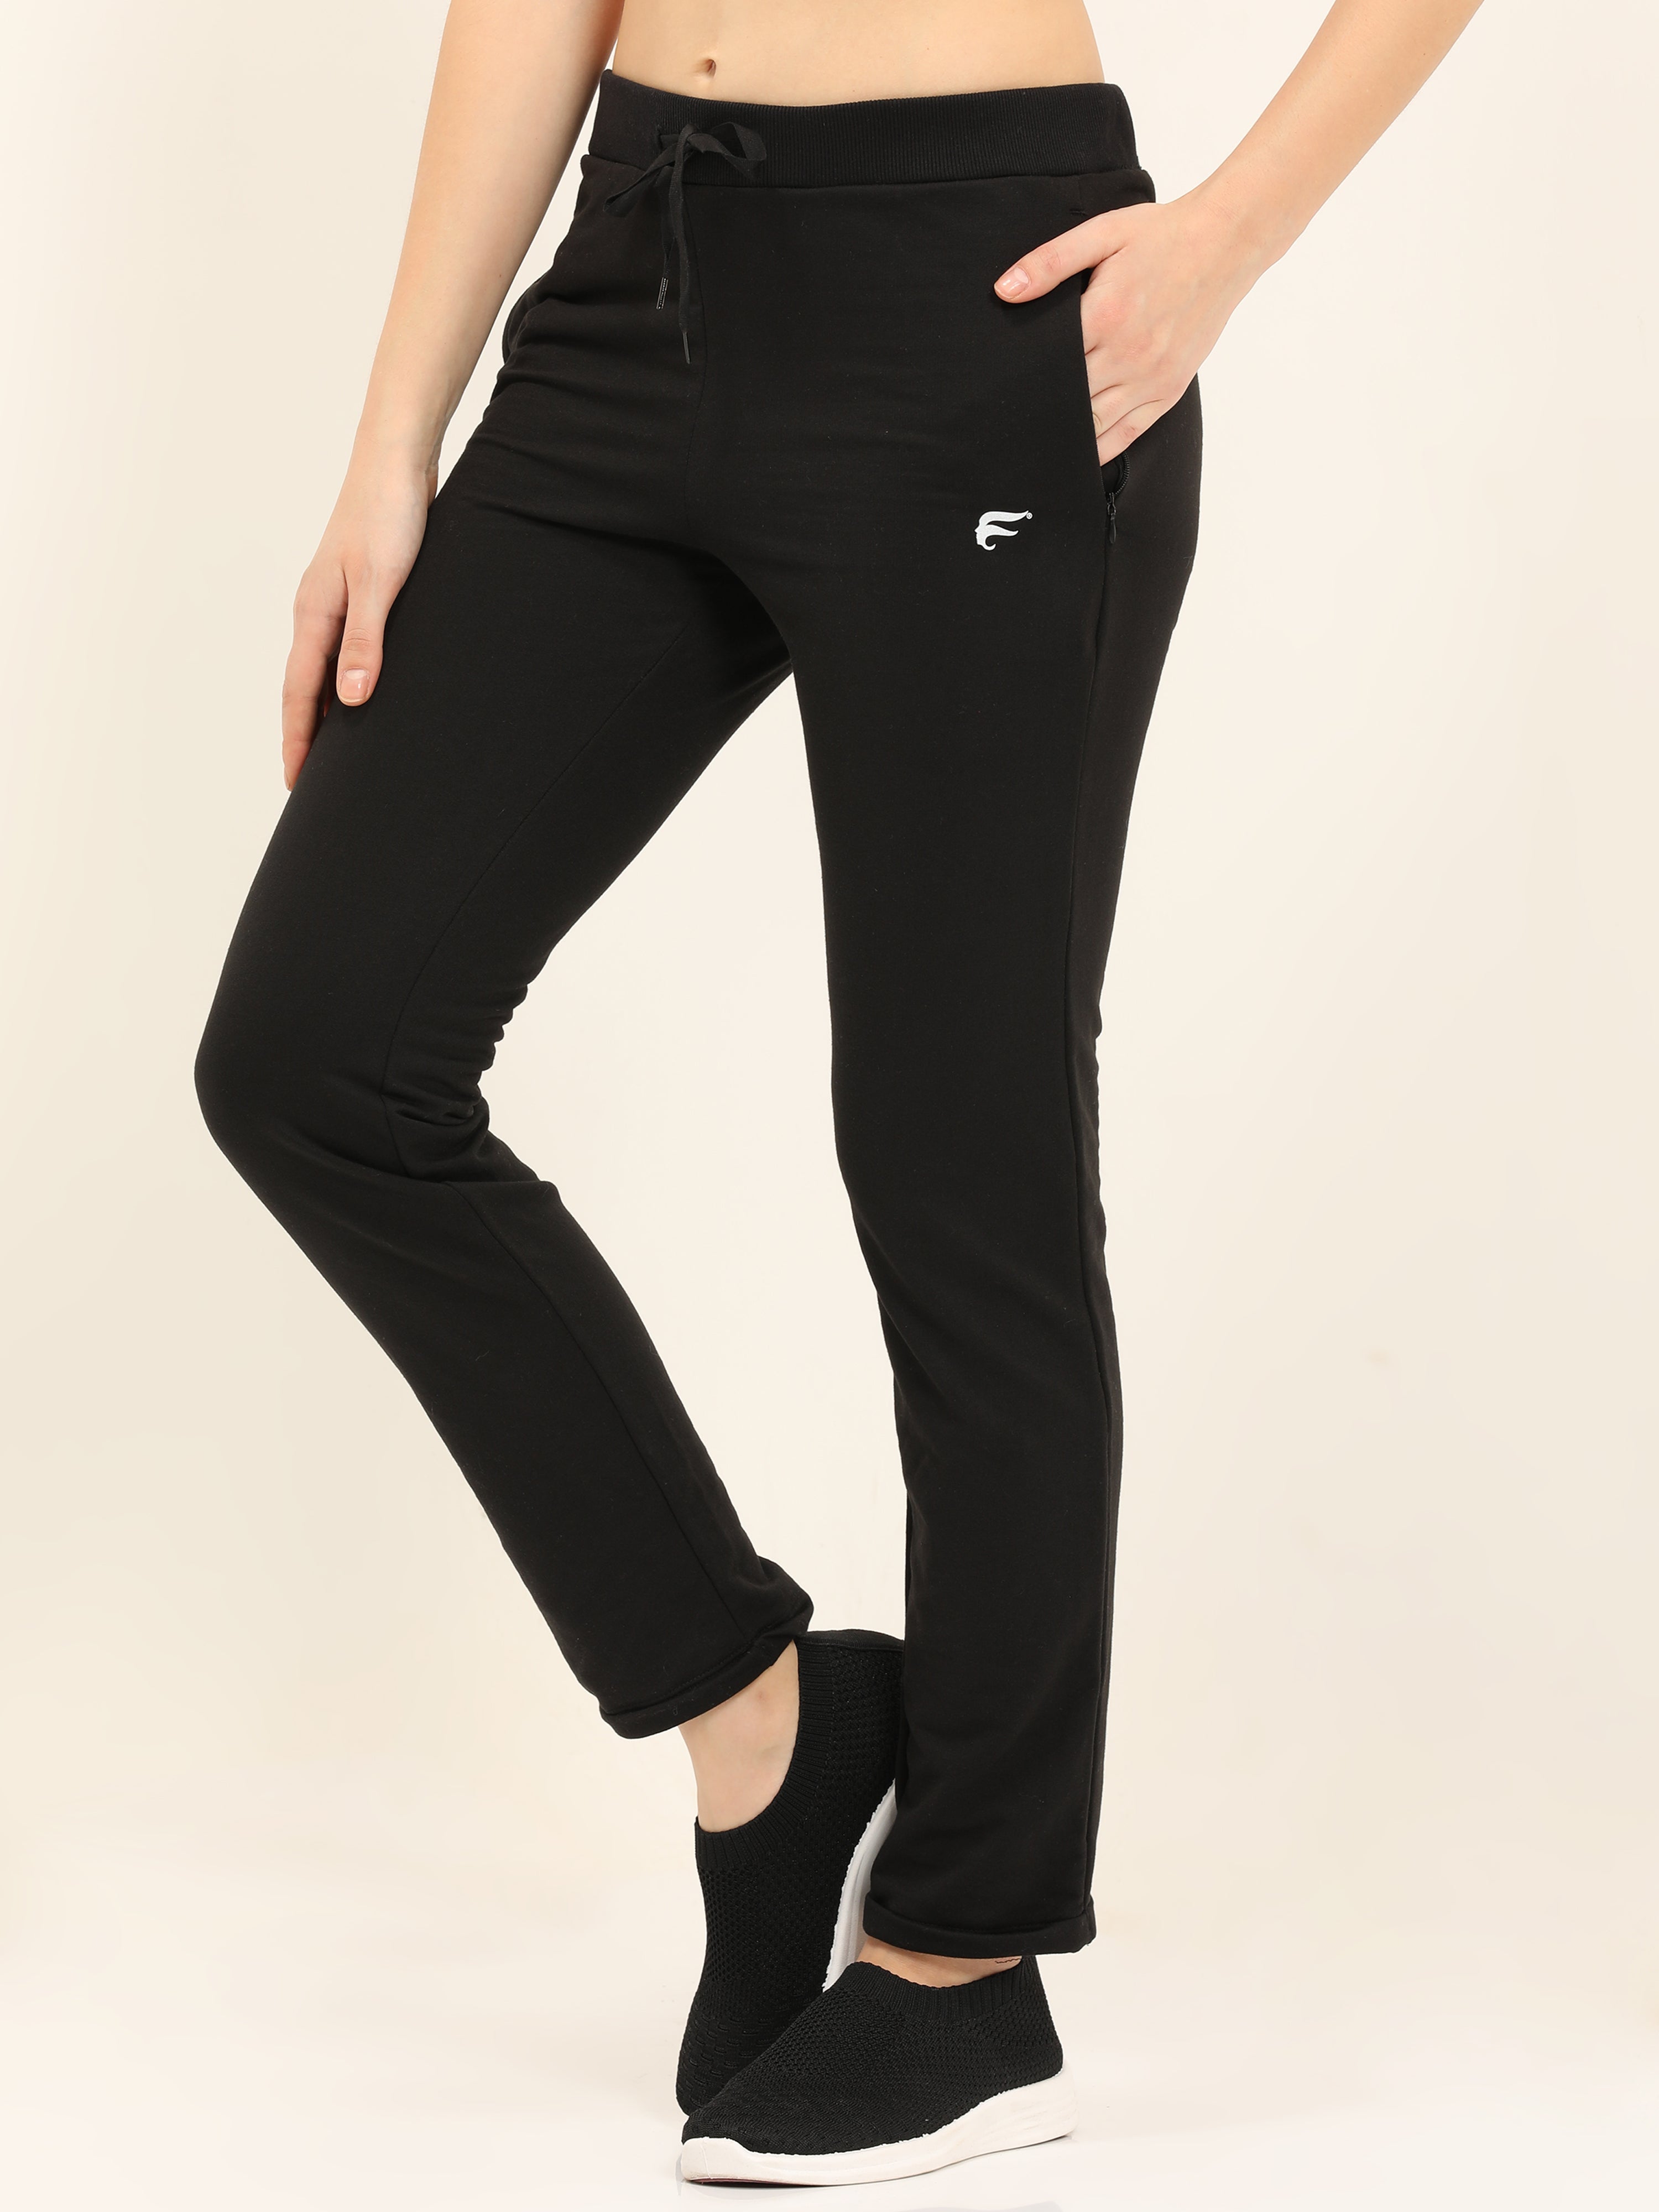 Buy ENVIE Women's Cotton Casual Track Pant_Ladies Sports Lower Wear Pants